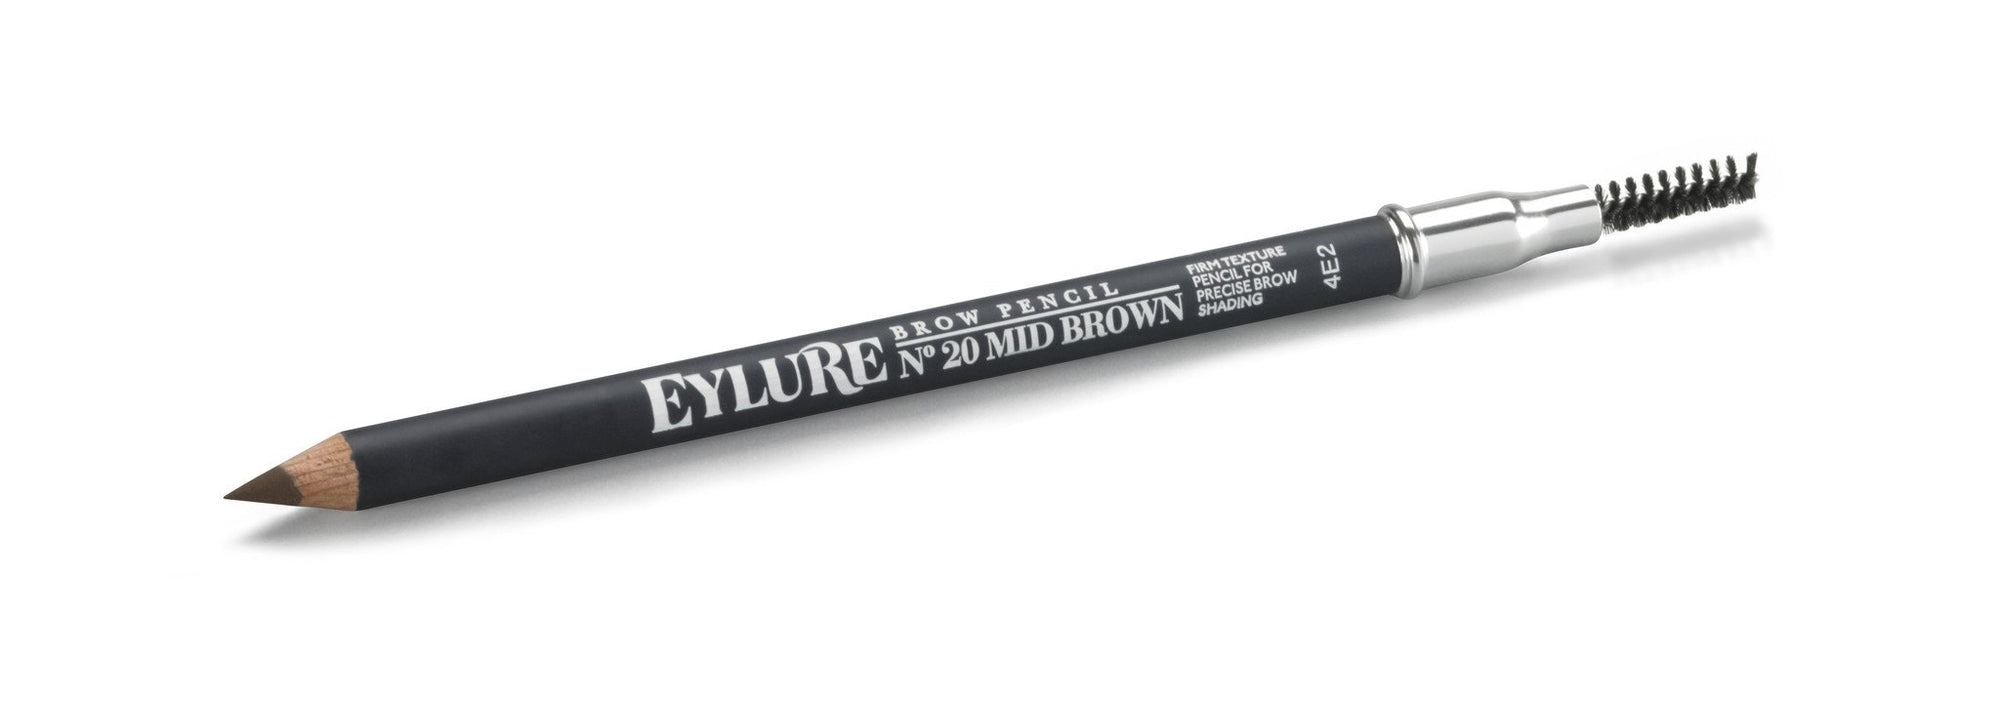 Brow Pencil #20 Mid Brown - Kulmakynä - Ihanathiukset.fi